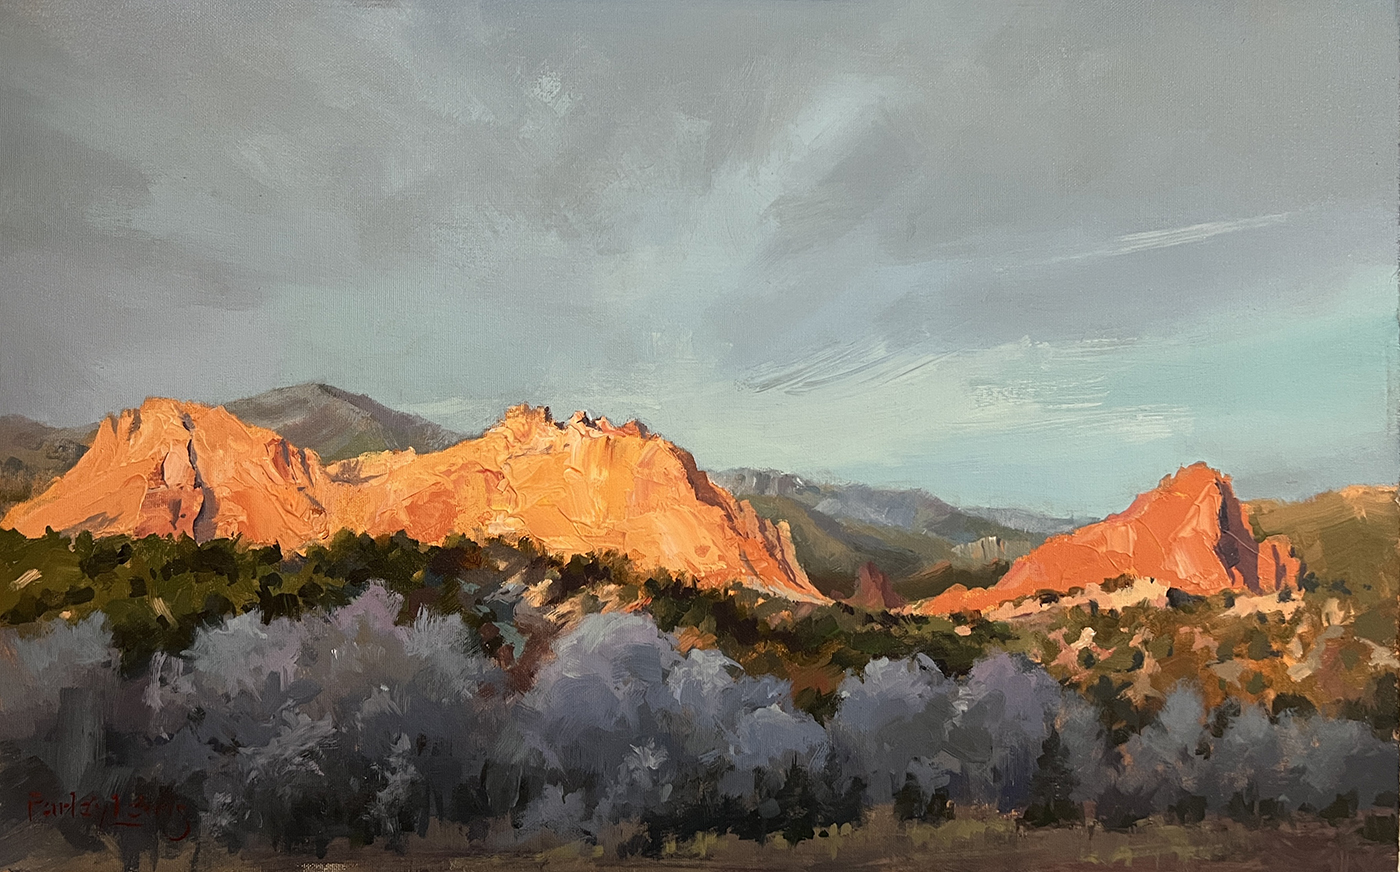 acrylic painting of sunrise hitting top of mountain peaks